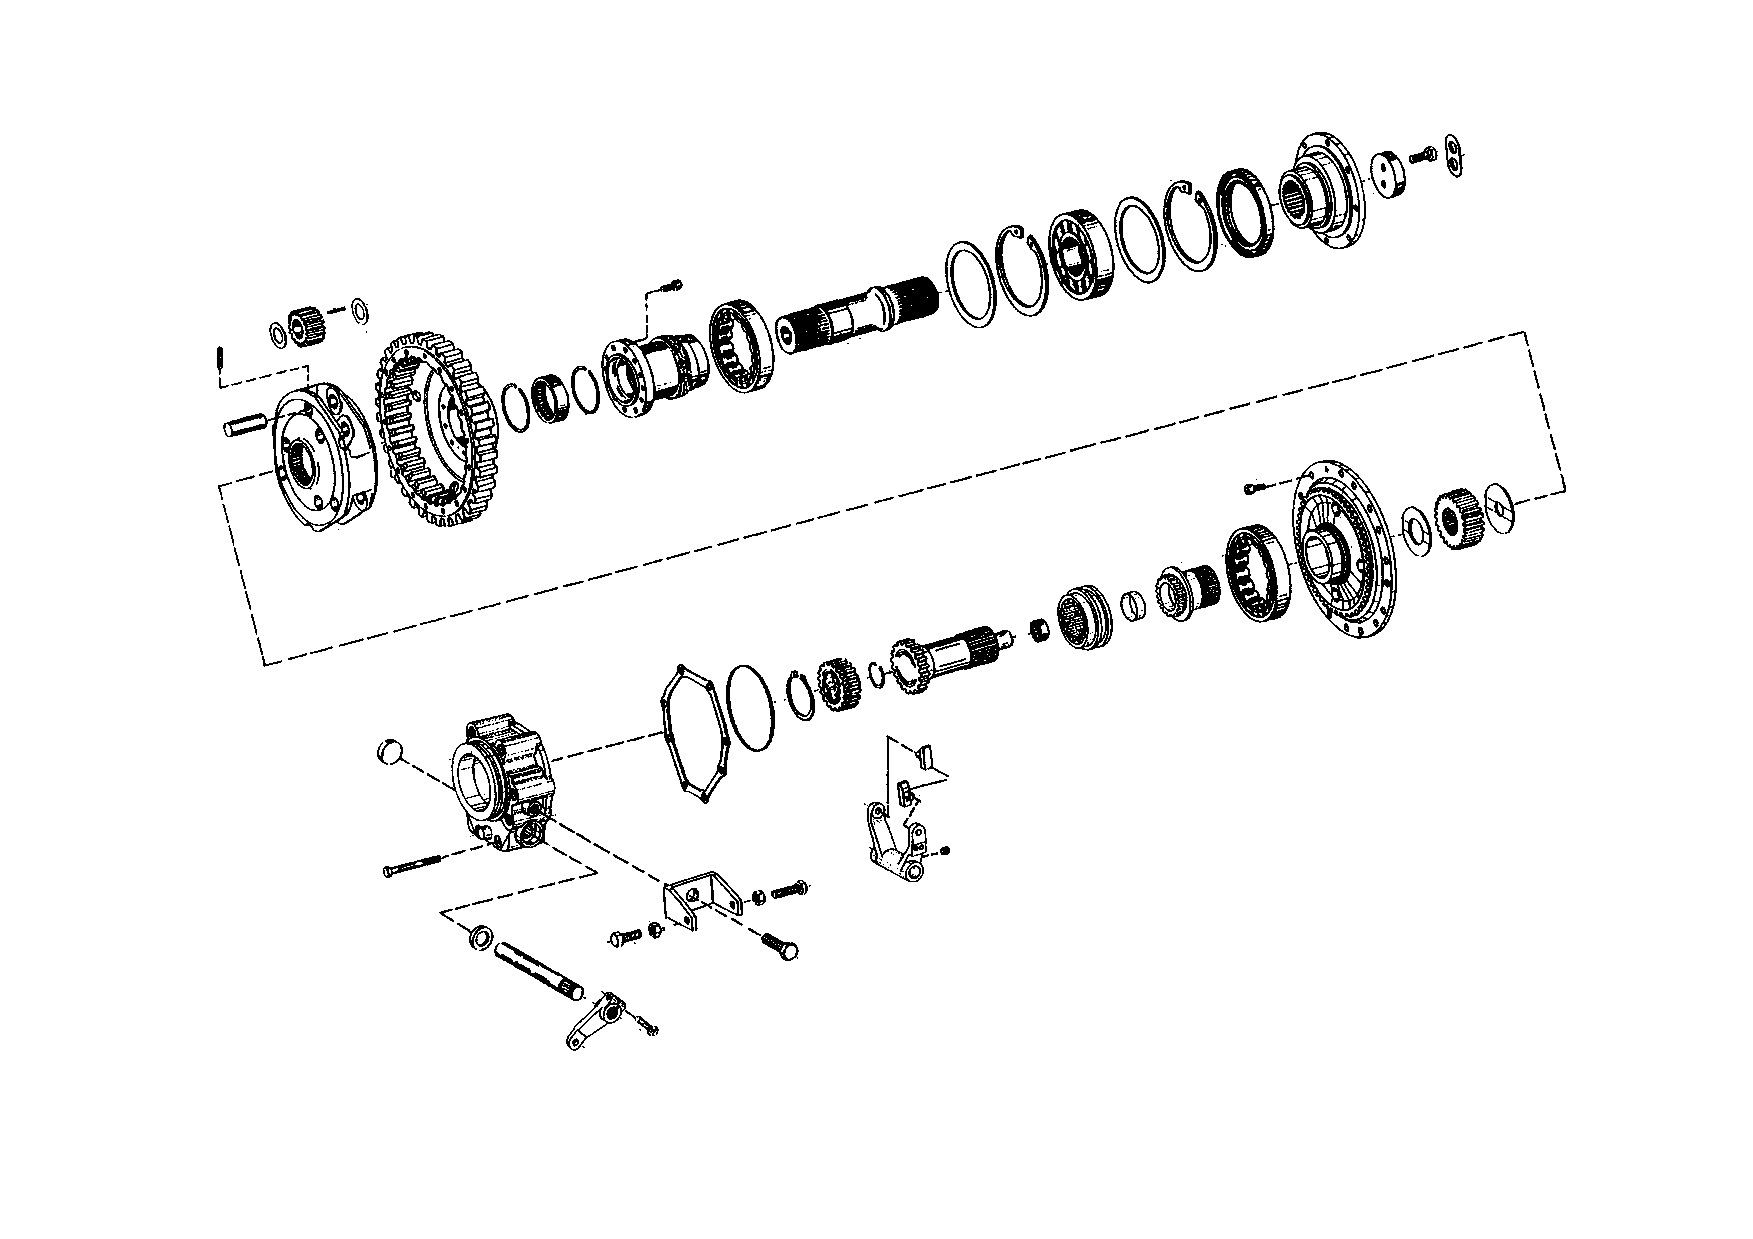 drawing for DOOSAN 052821 - PLANET CARRIER (figure 5)